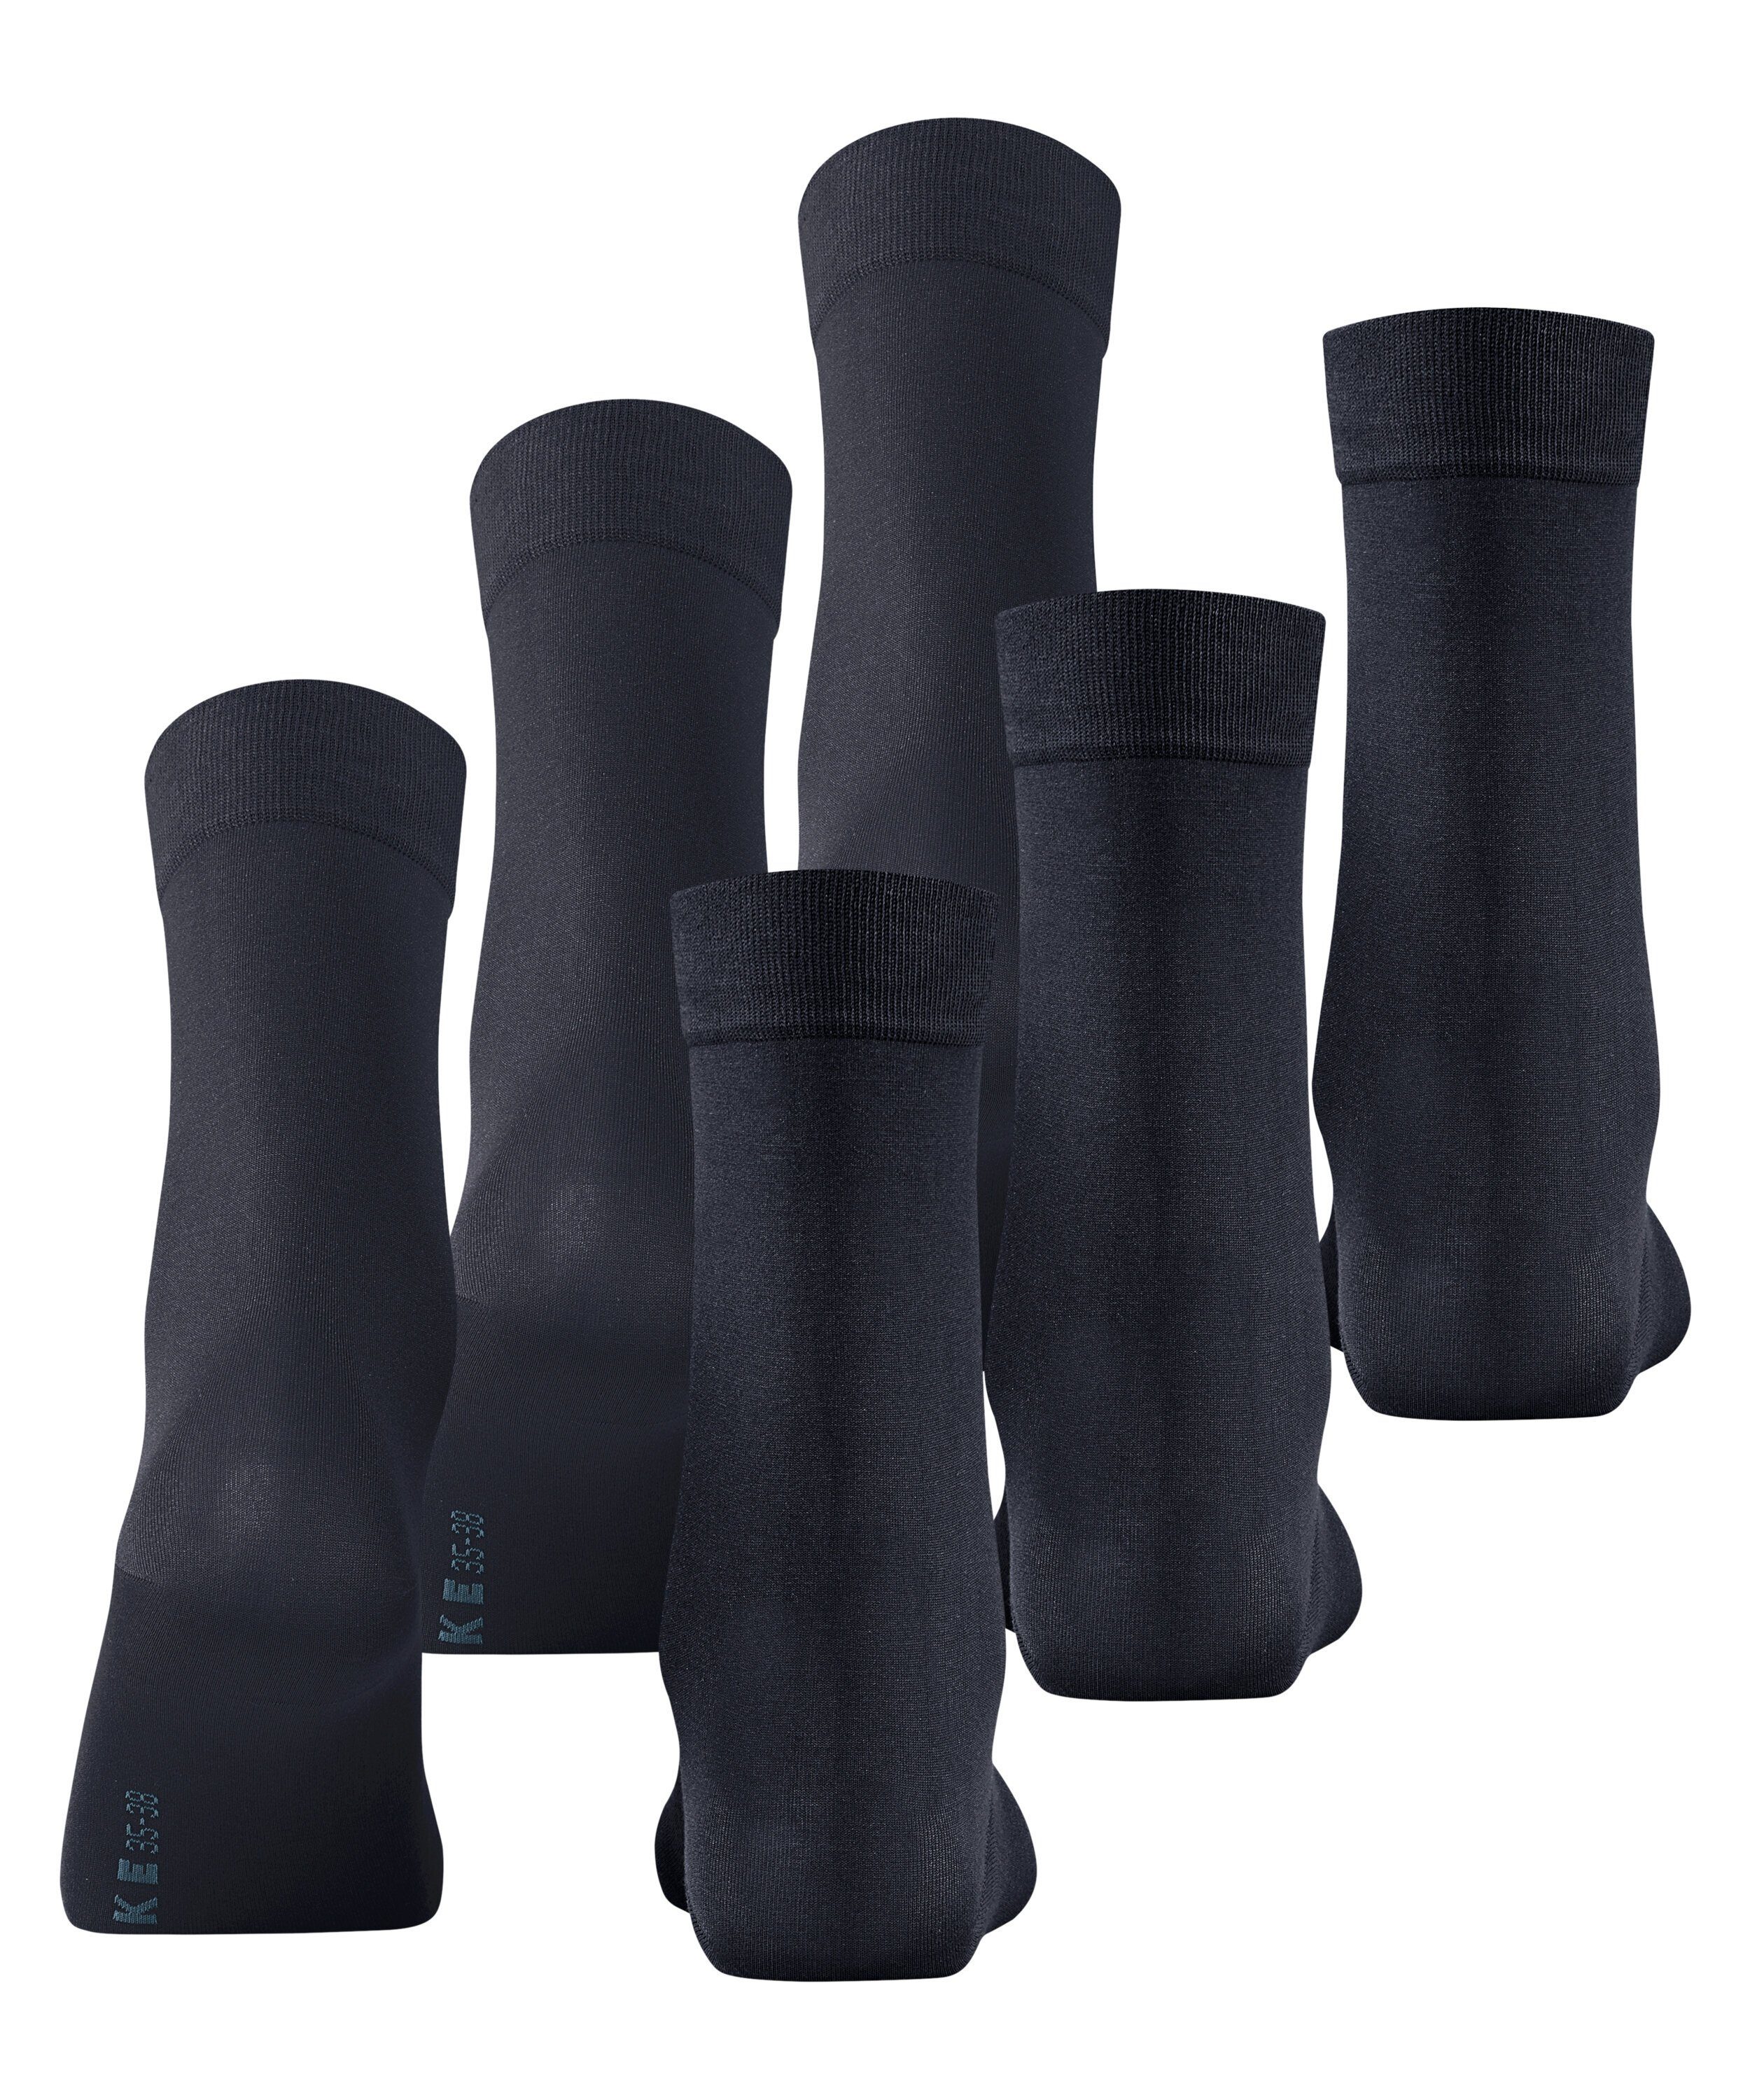 Cotton FALKE Touch dark (6370) Socken 3-Pack navy (3-Paar)